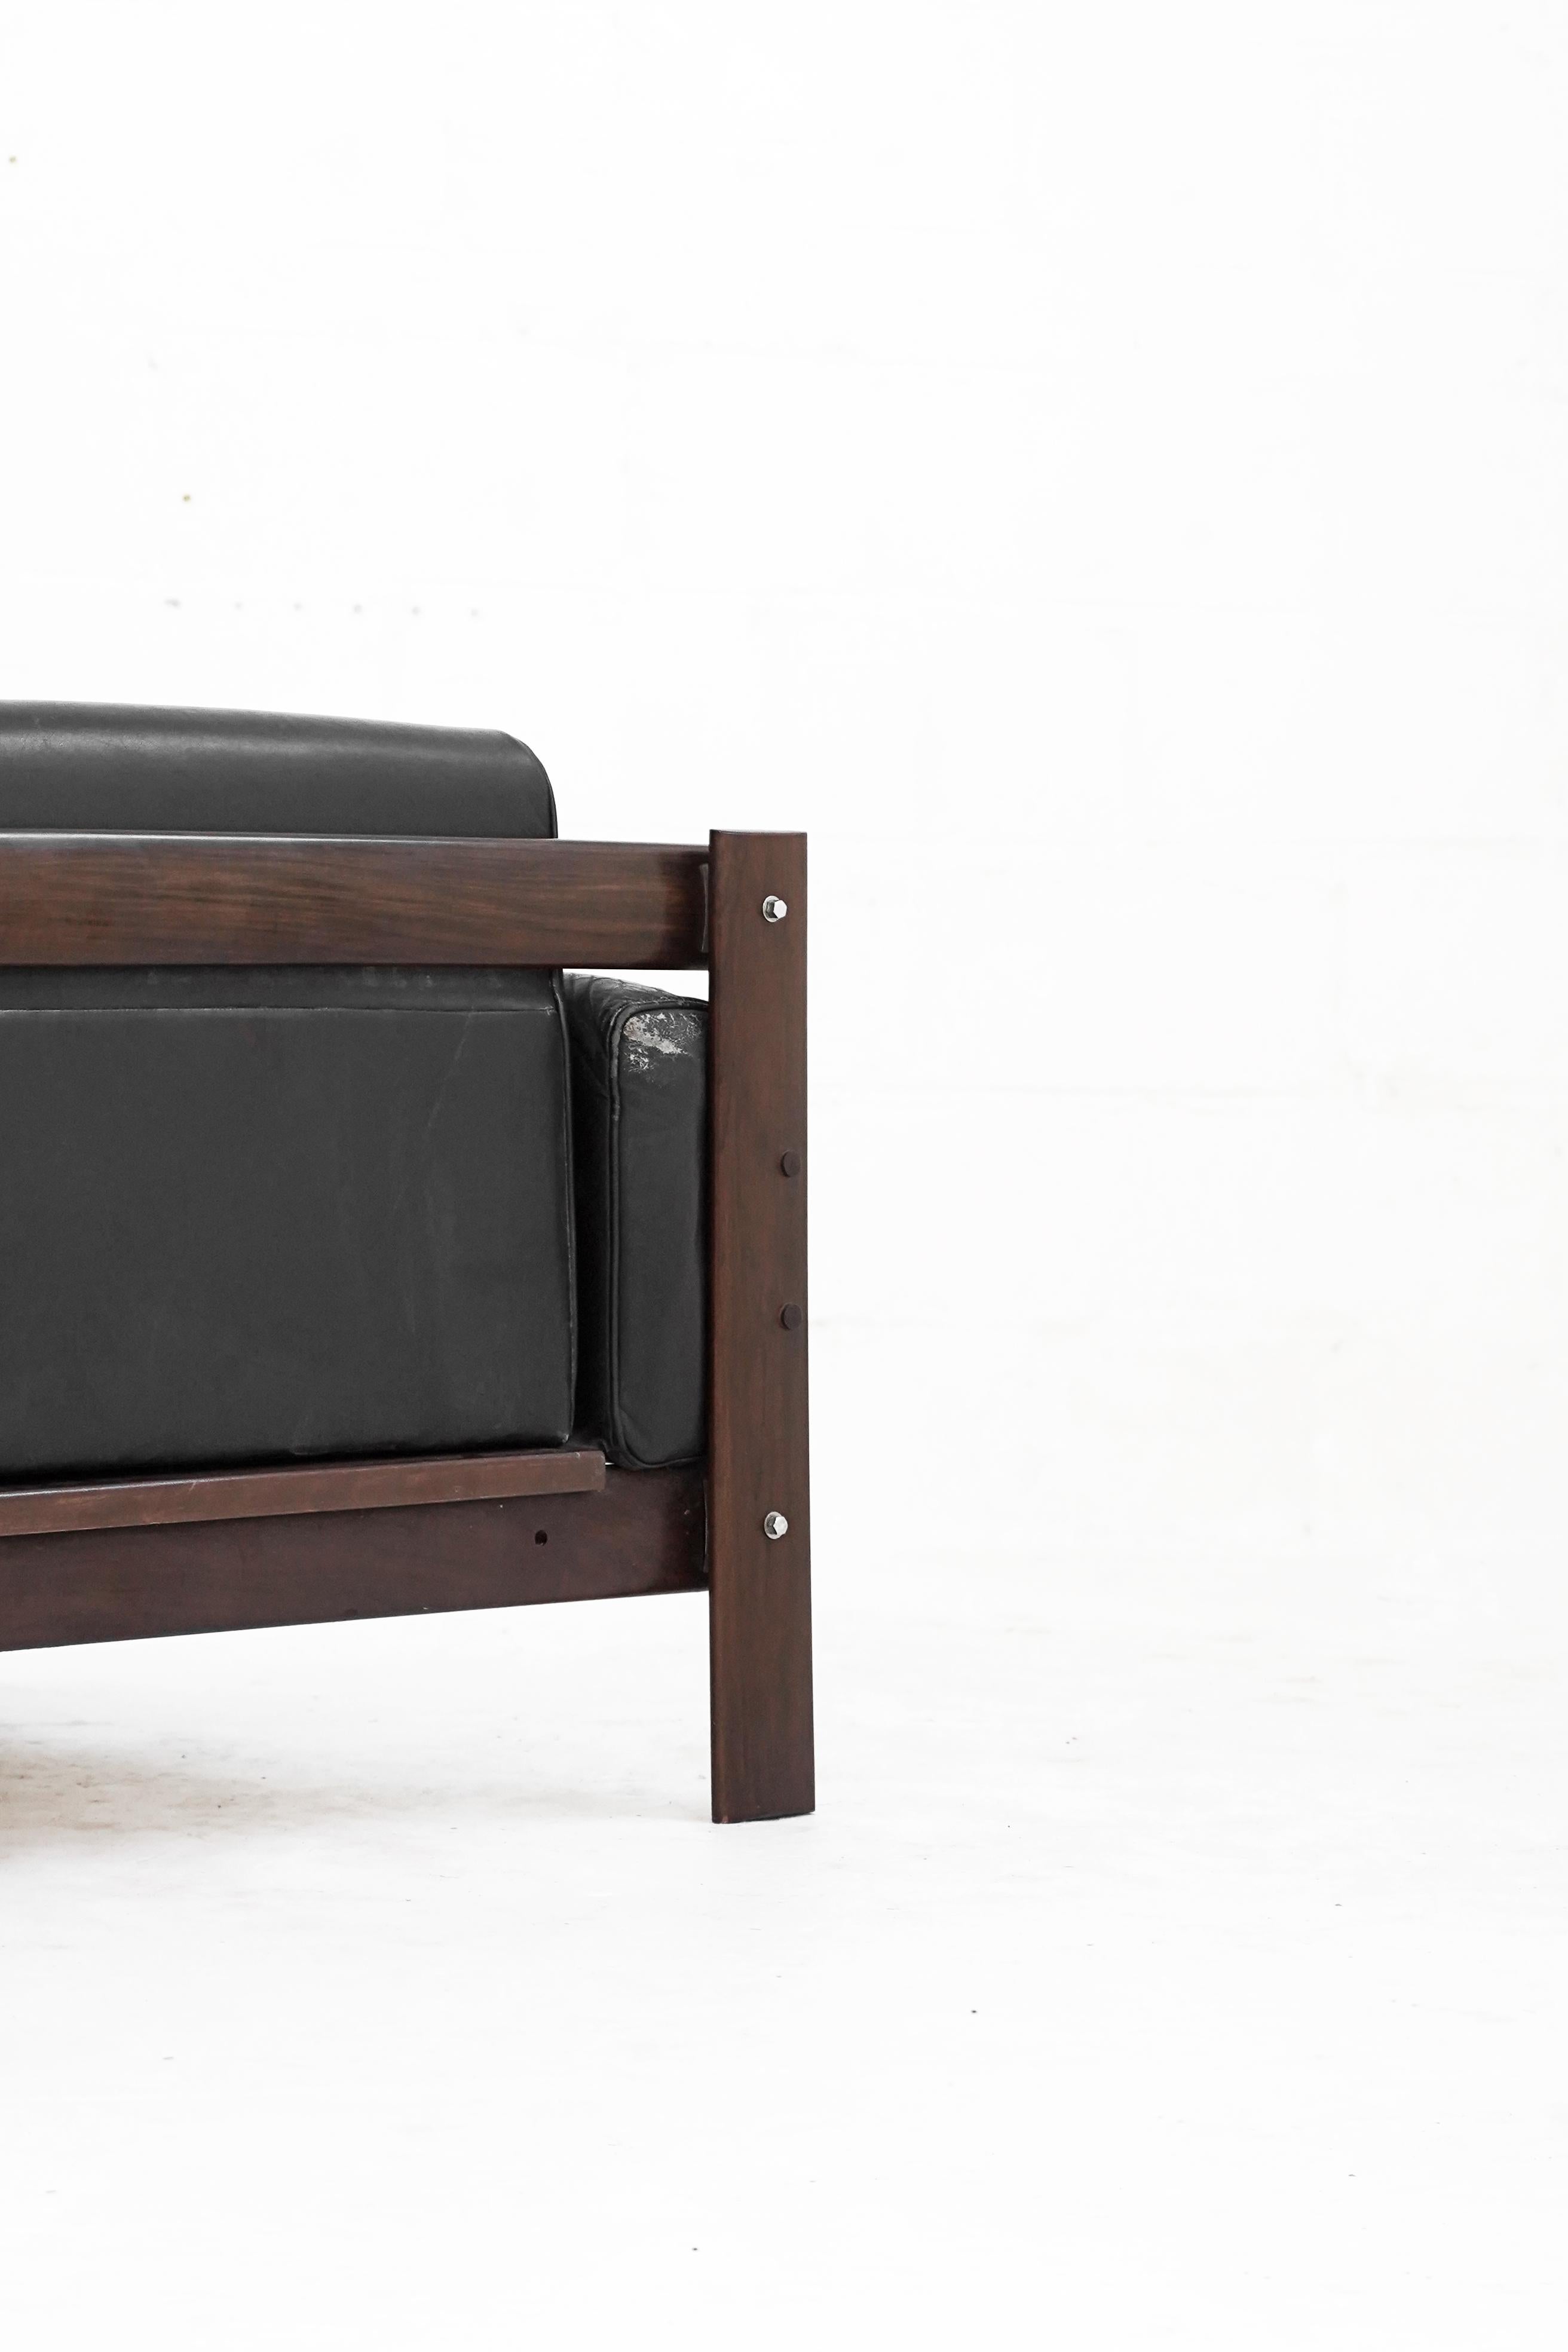 Jacaranda MP-51 Brazilian Lounge Chair by Percival Lafer for Móveis Lafer For Sale